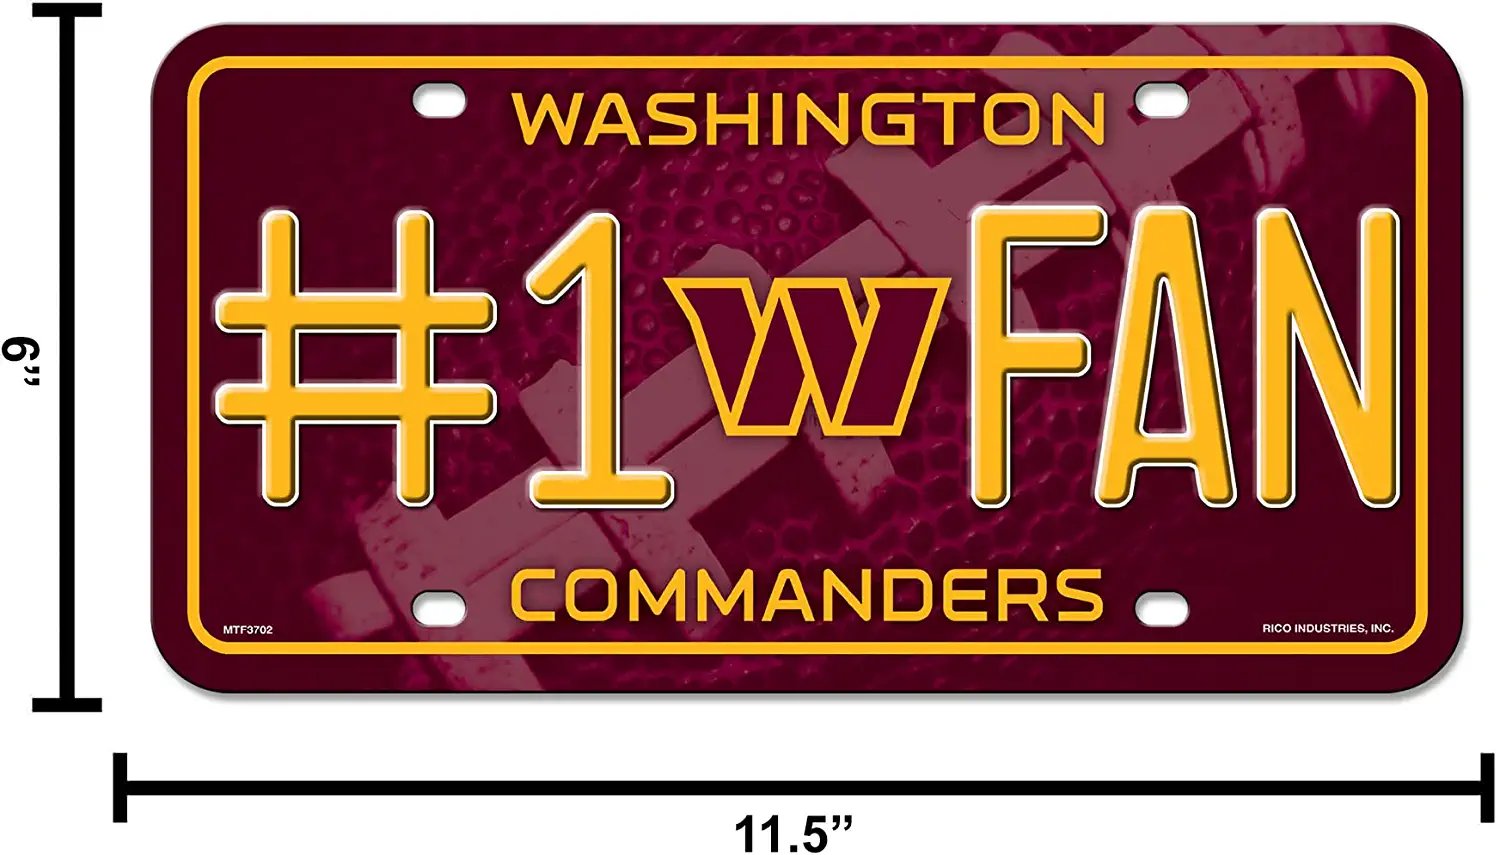 Washington Commanders Metal Auto Tag License Plate, #1 Fan Design, 6x12 Inch